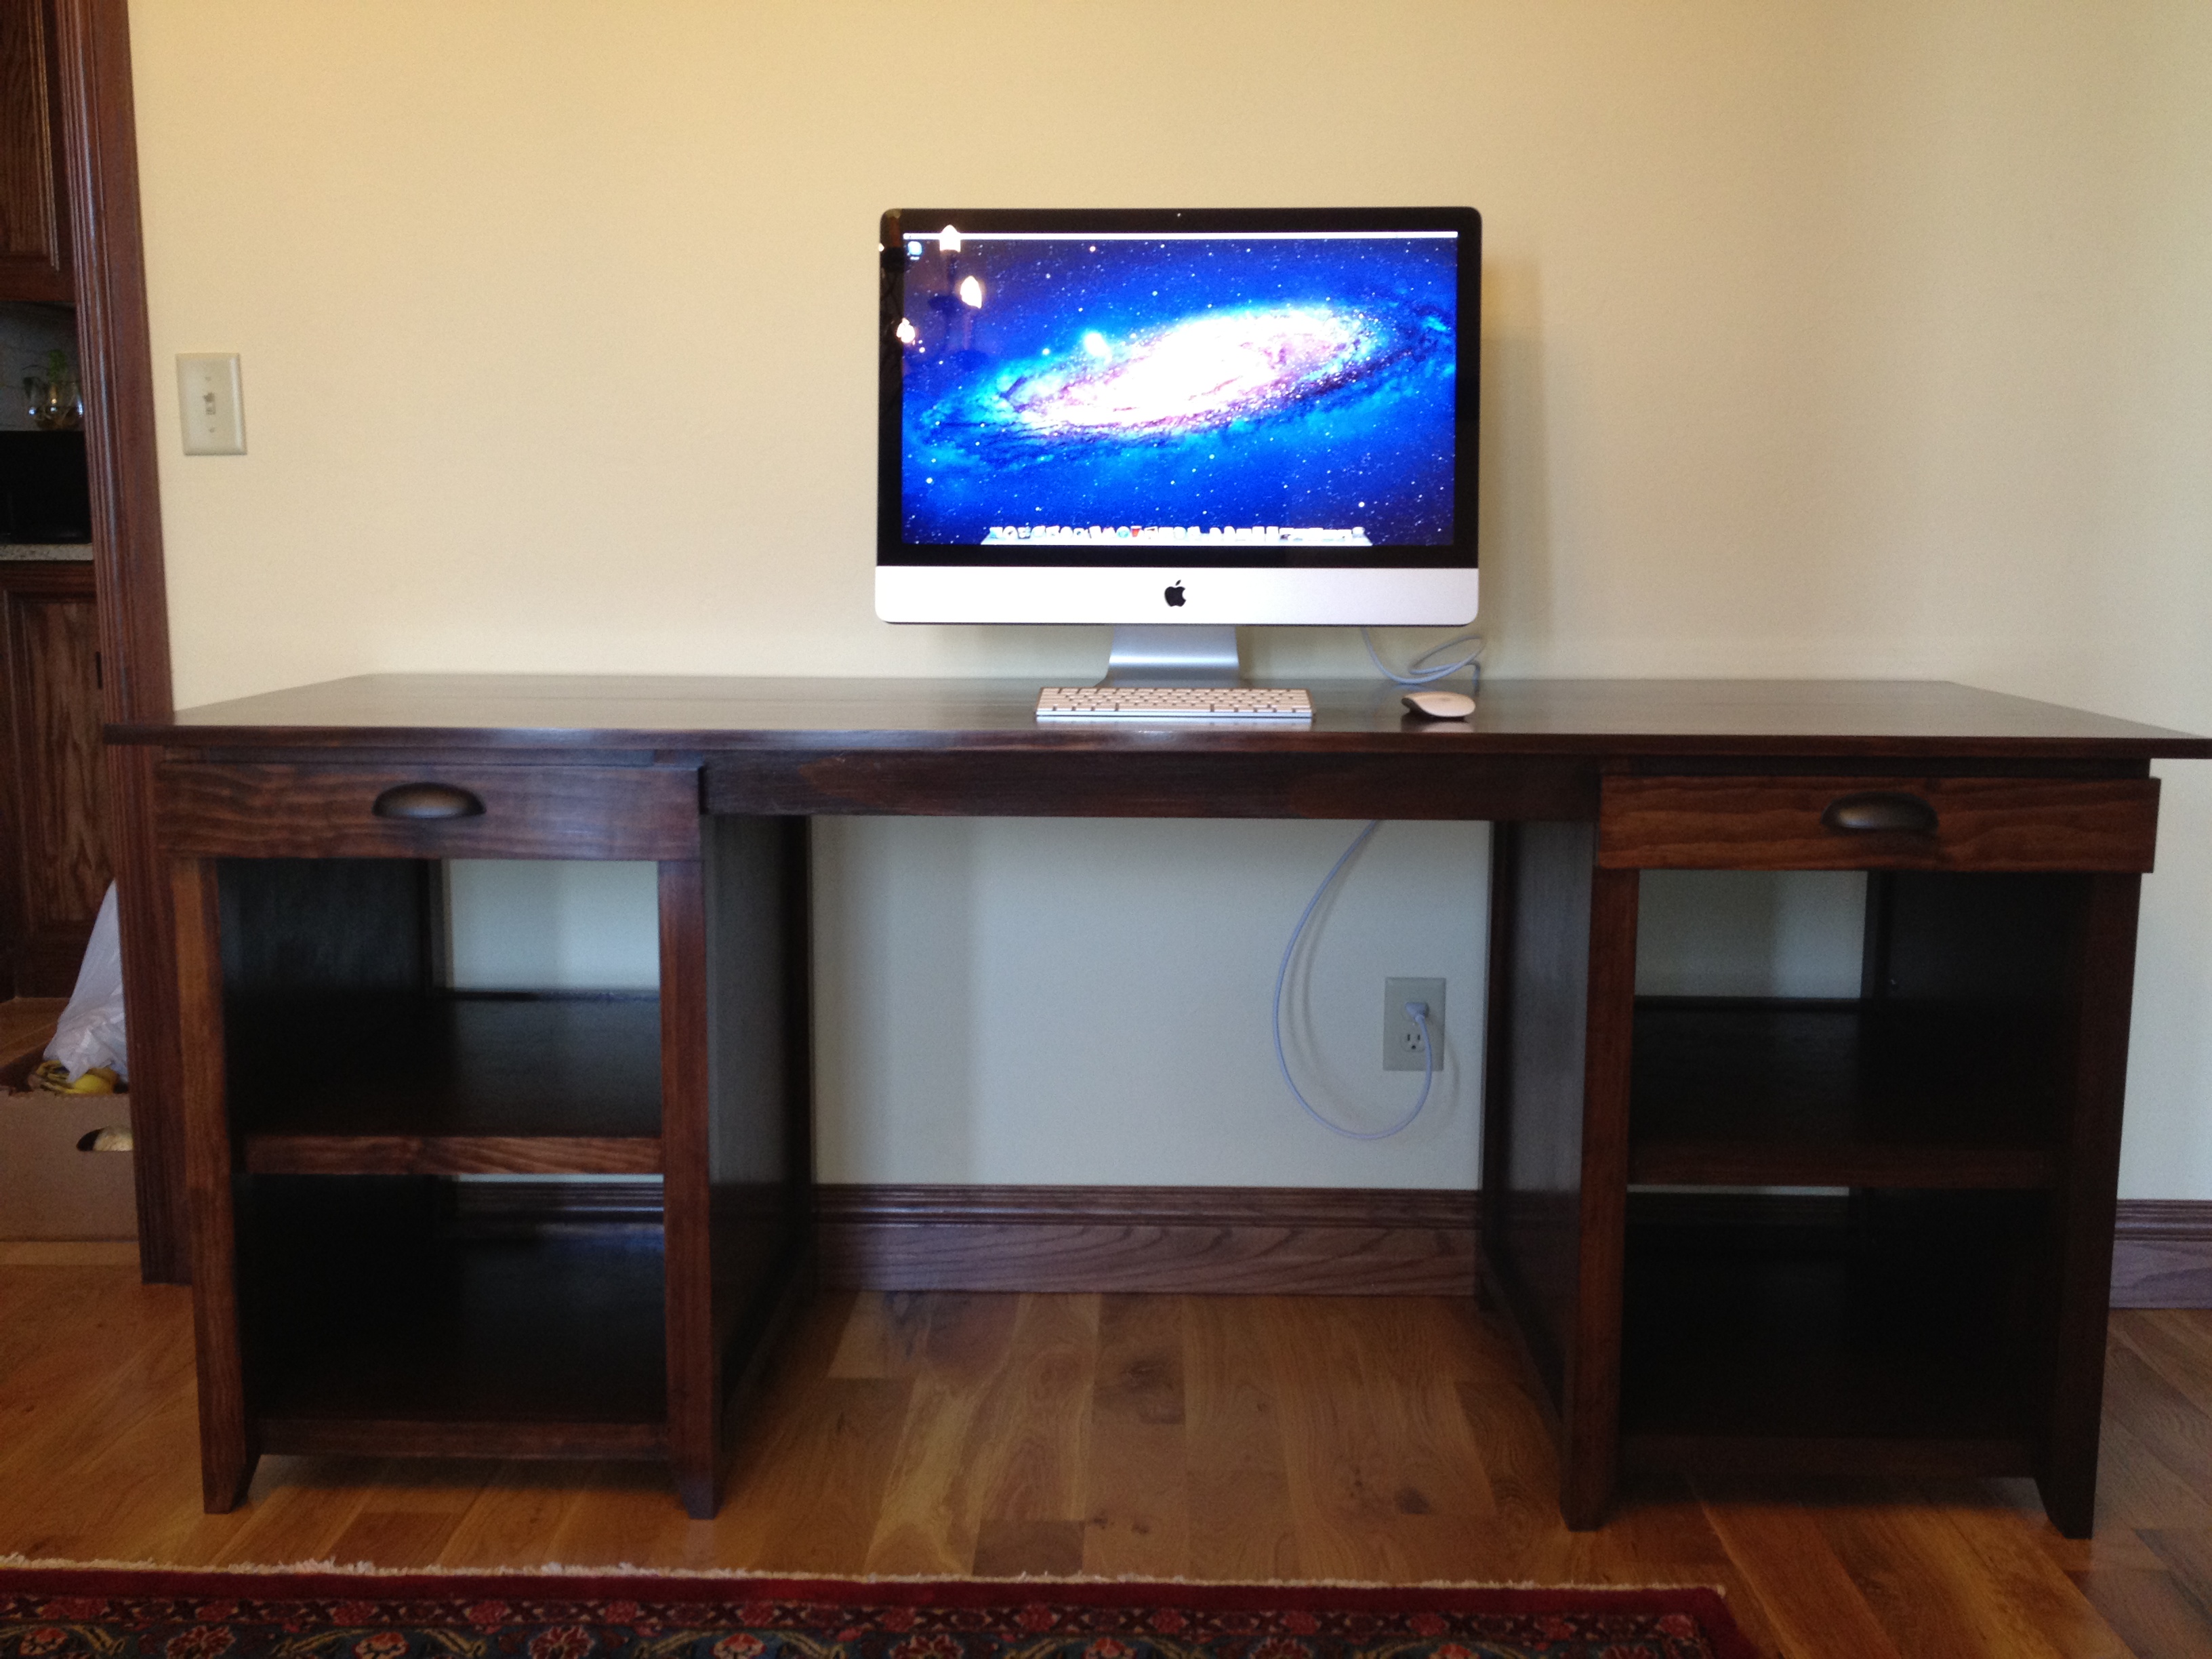 19 Simple DIY Desk Ideas for Any Room